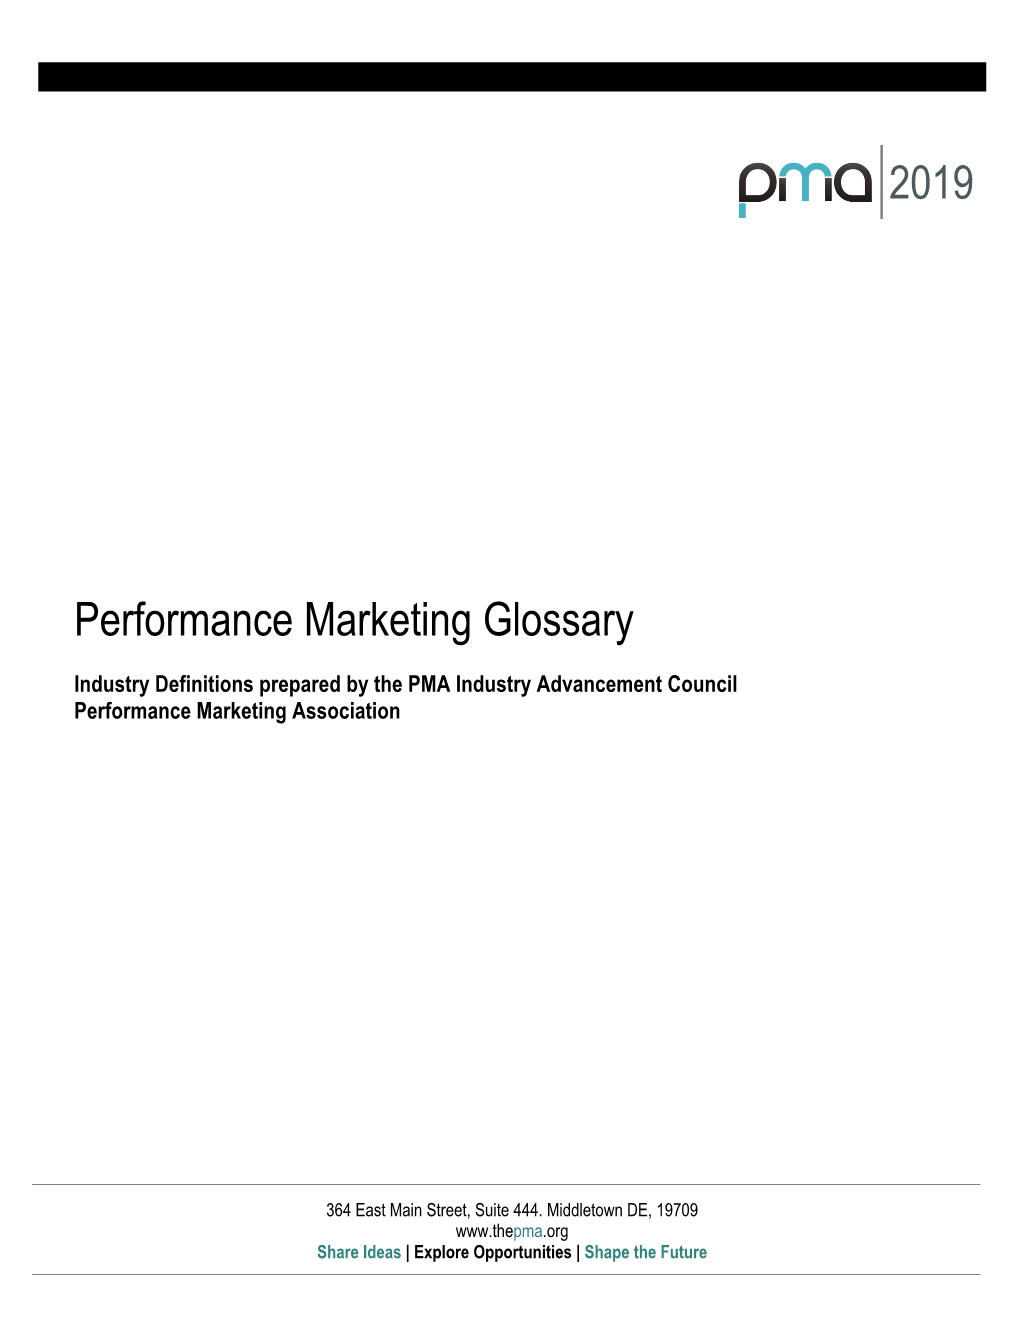 Performance Marketing Glossary 2019